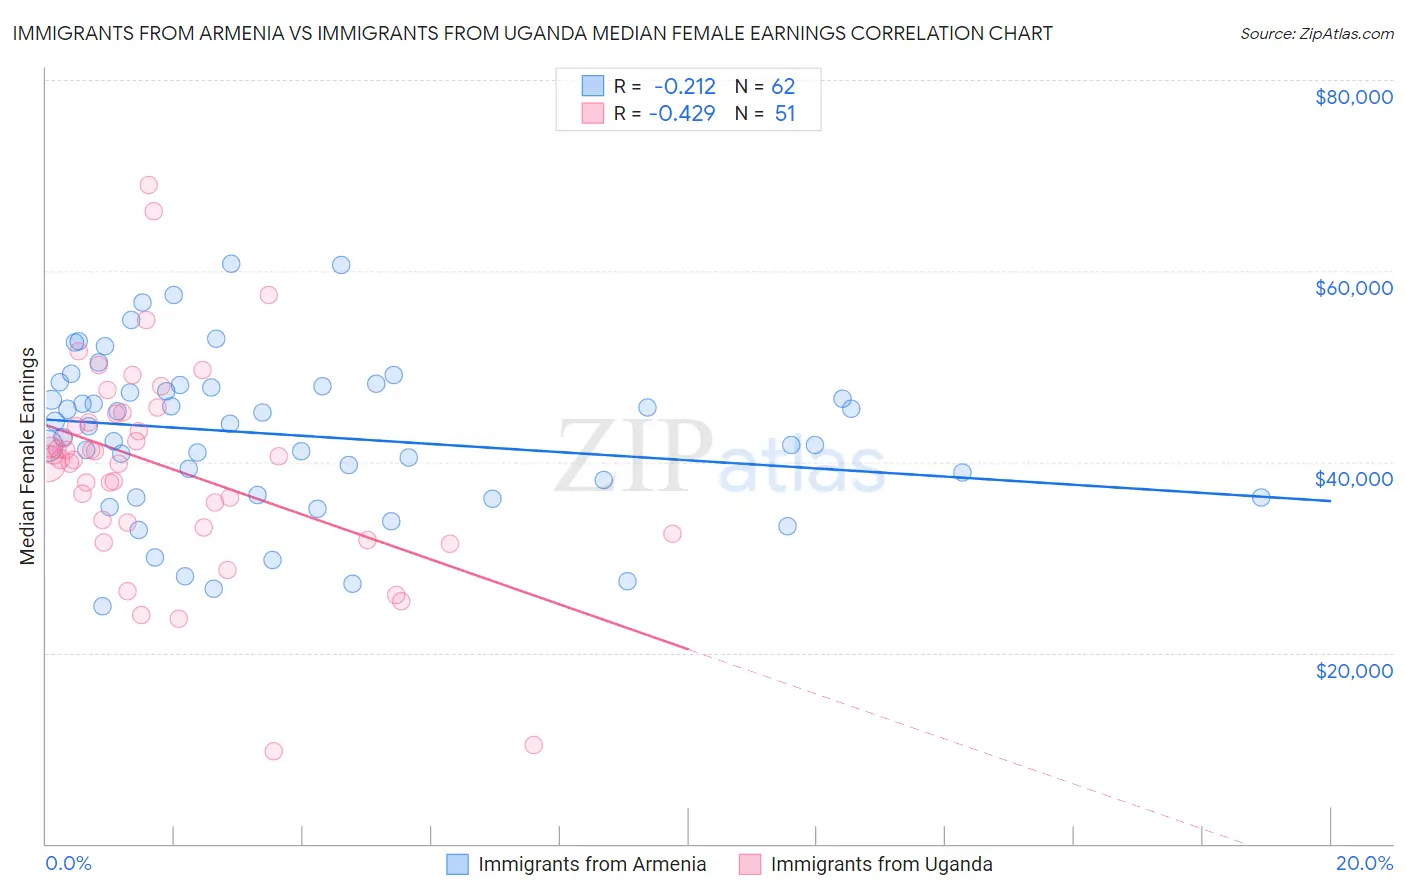 Immigrants from Armenia vs Immigrants from Uganda Median Female Earnings